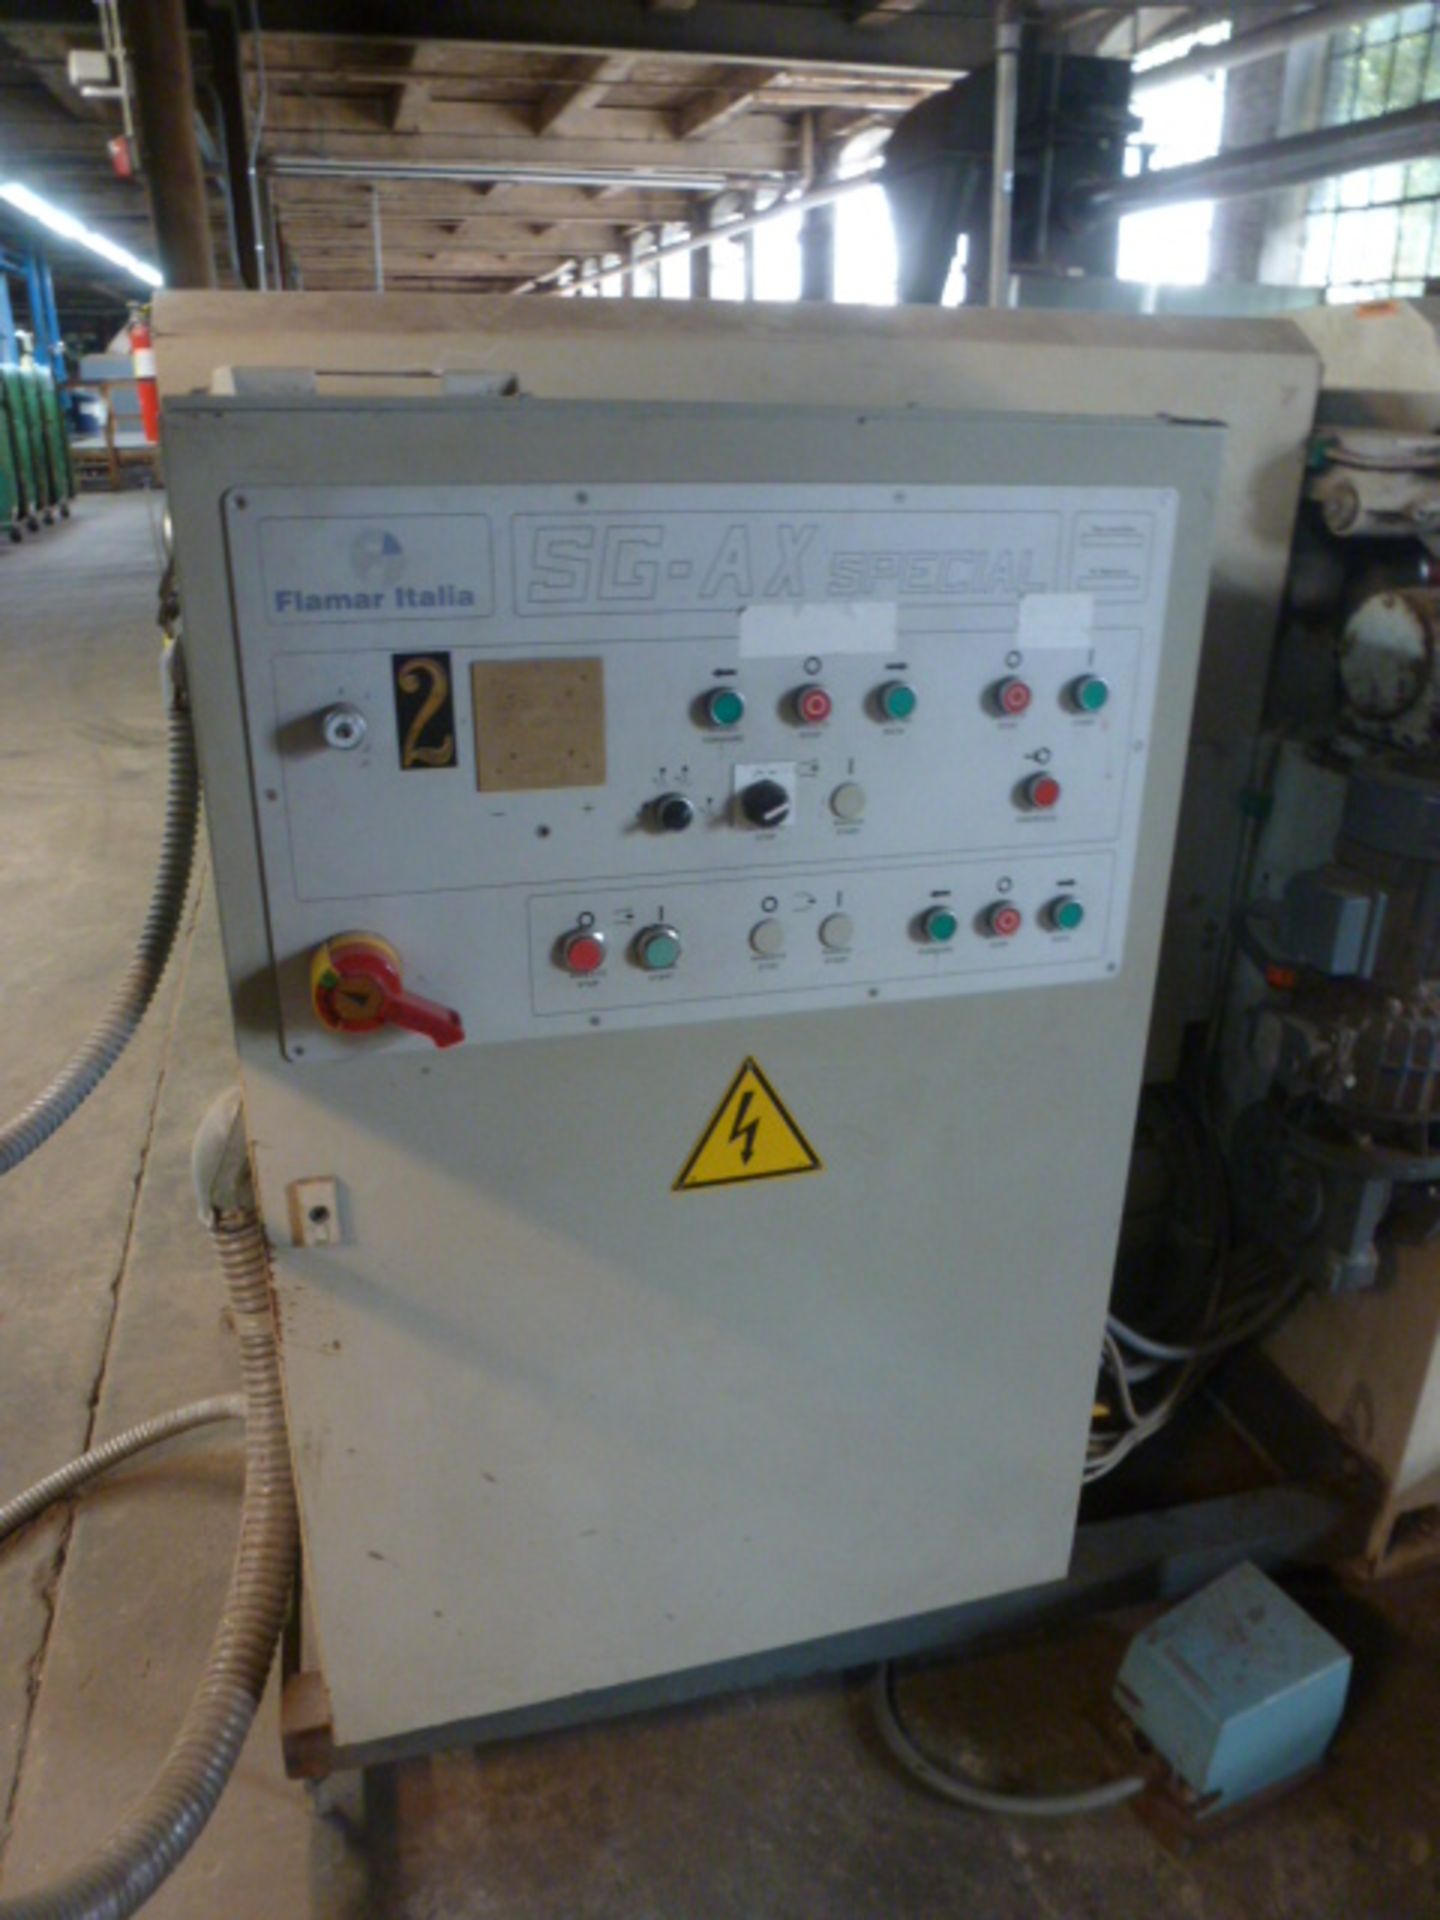 Flamar Italia Buffing Machine, m/n SG3000, s/n 10098 - Image 6 of 9